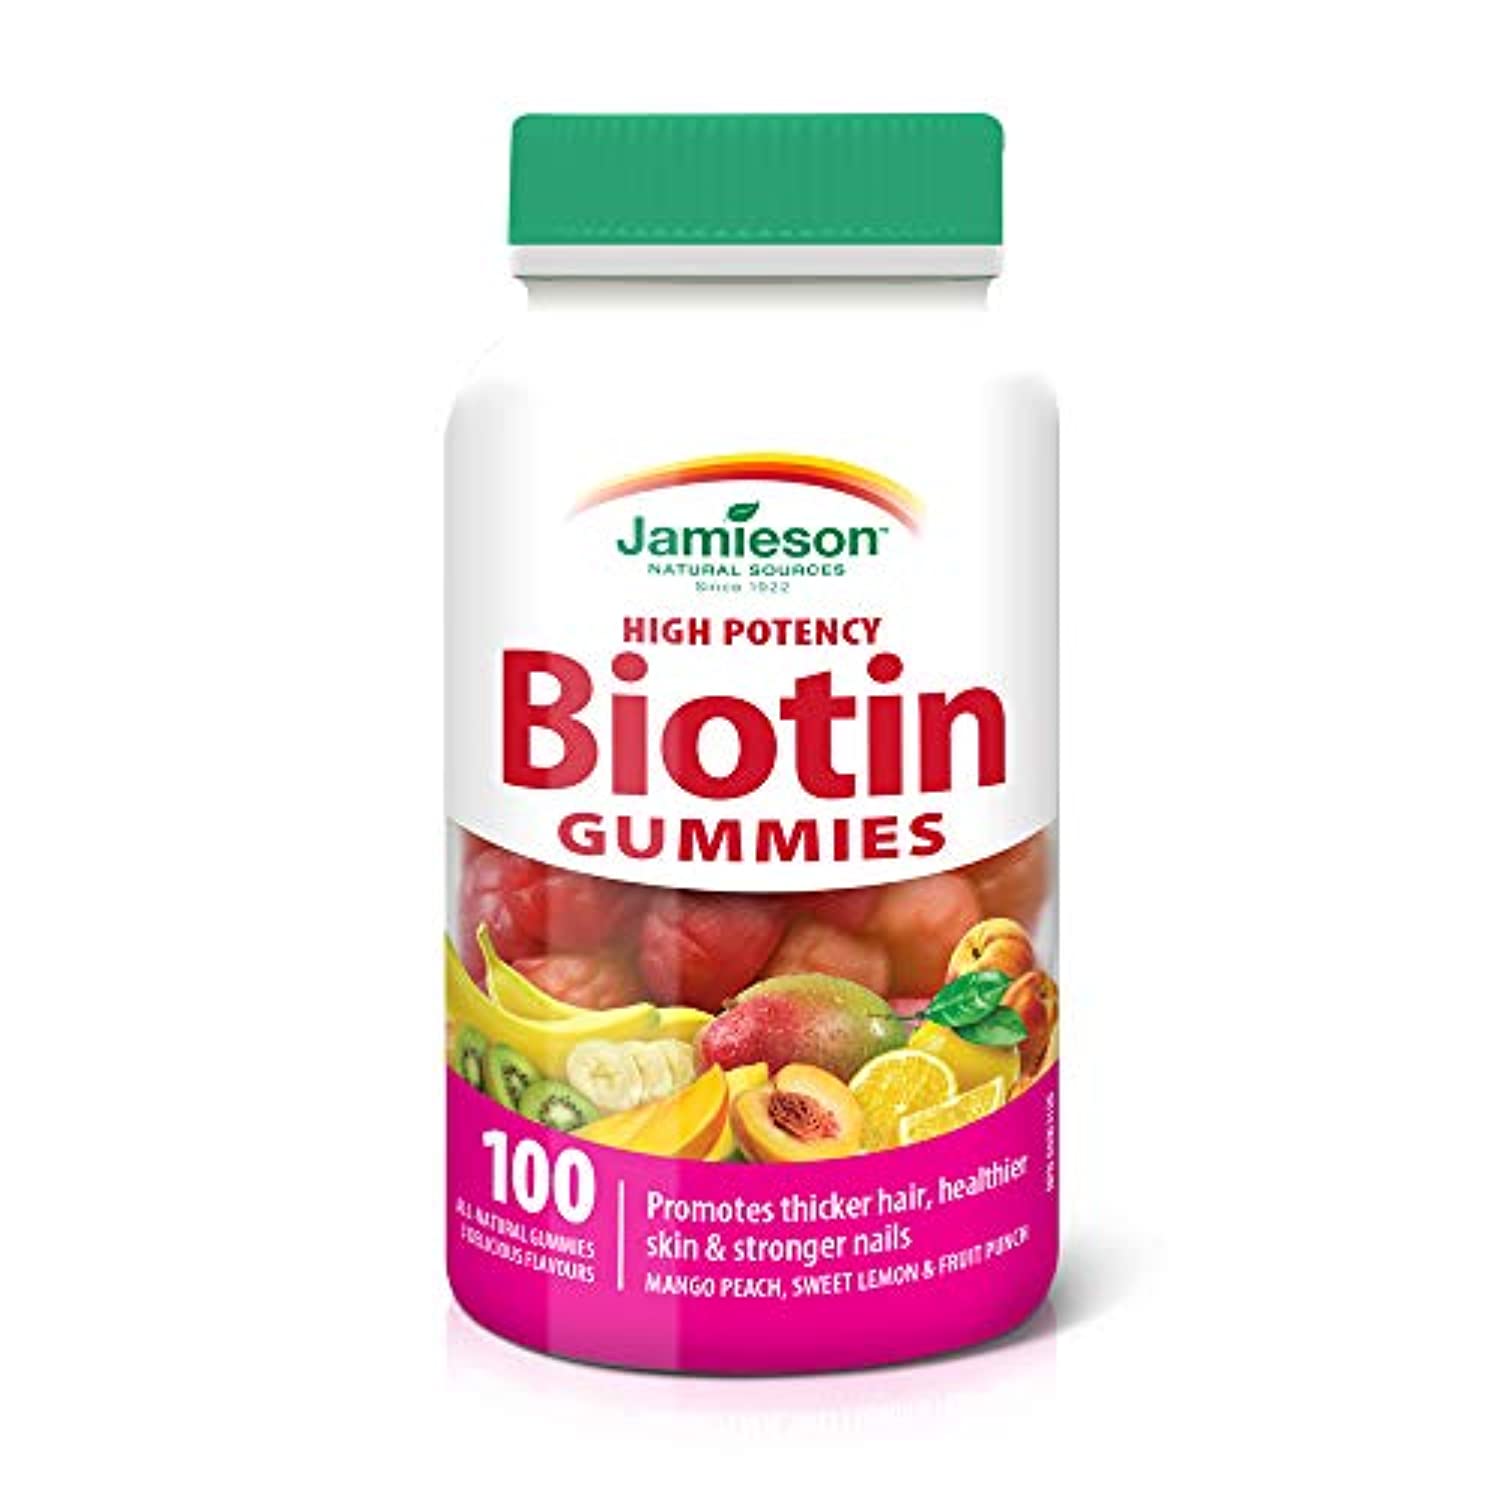 Jamieson High Potency Biotin Gummies, 100 Count